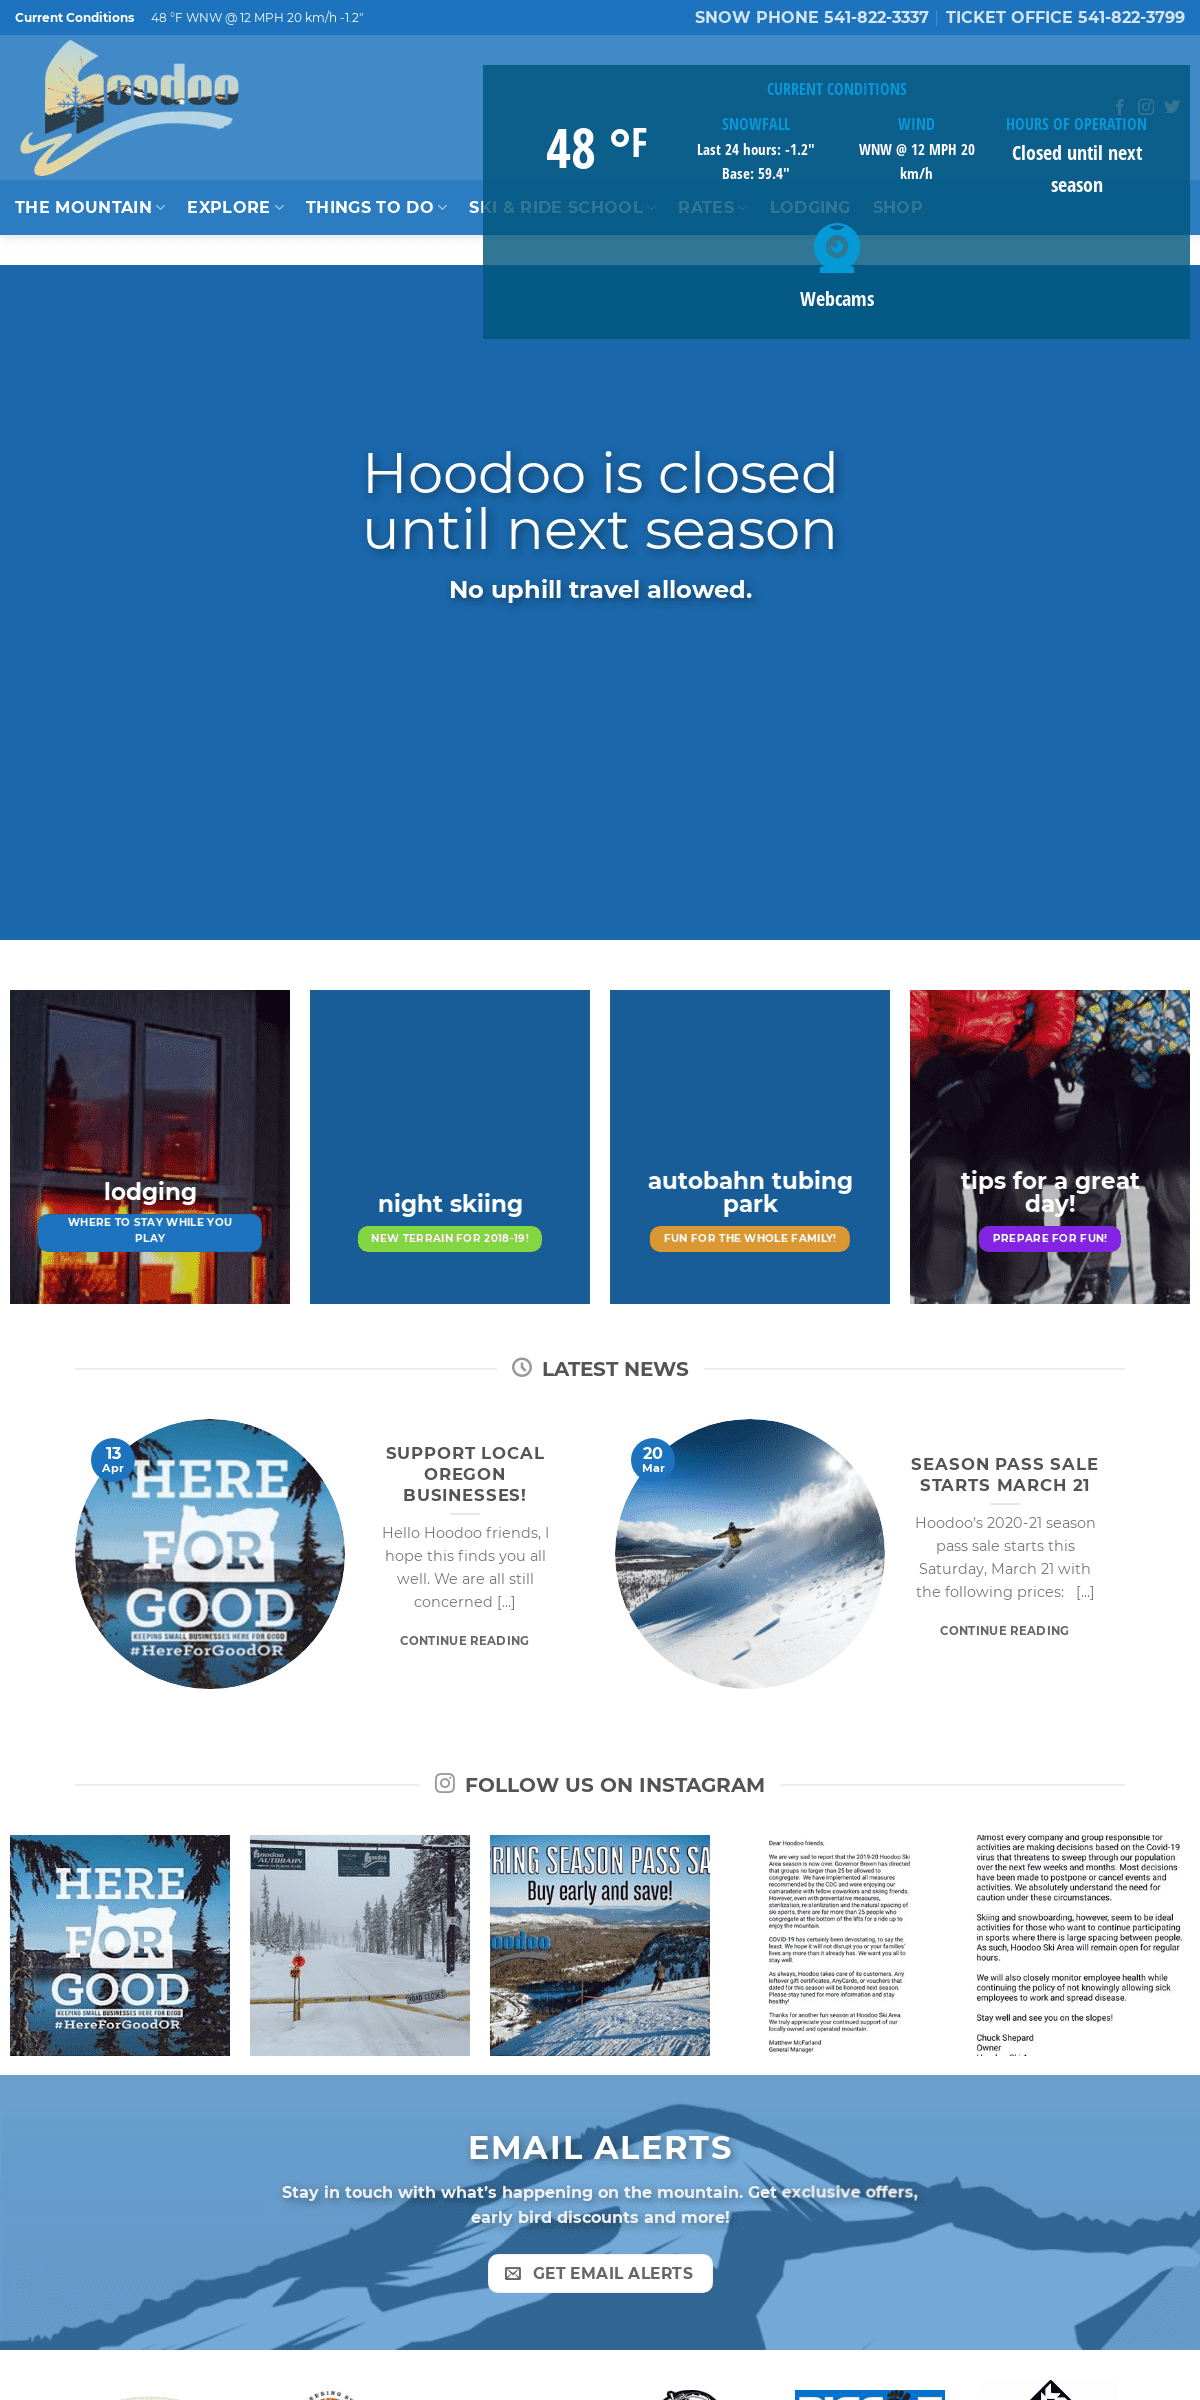 A complete backup of skihoodoo.com